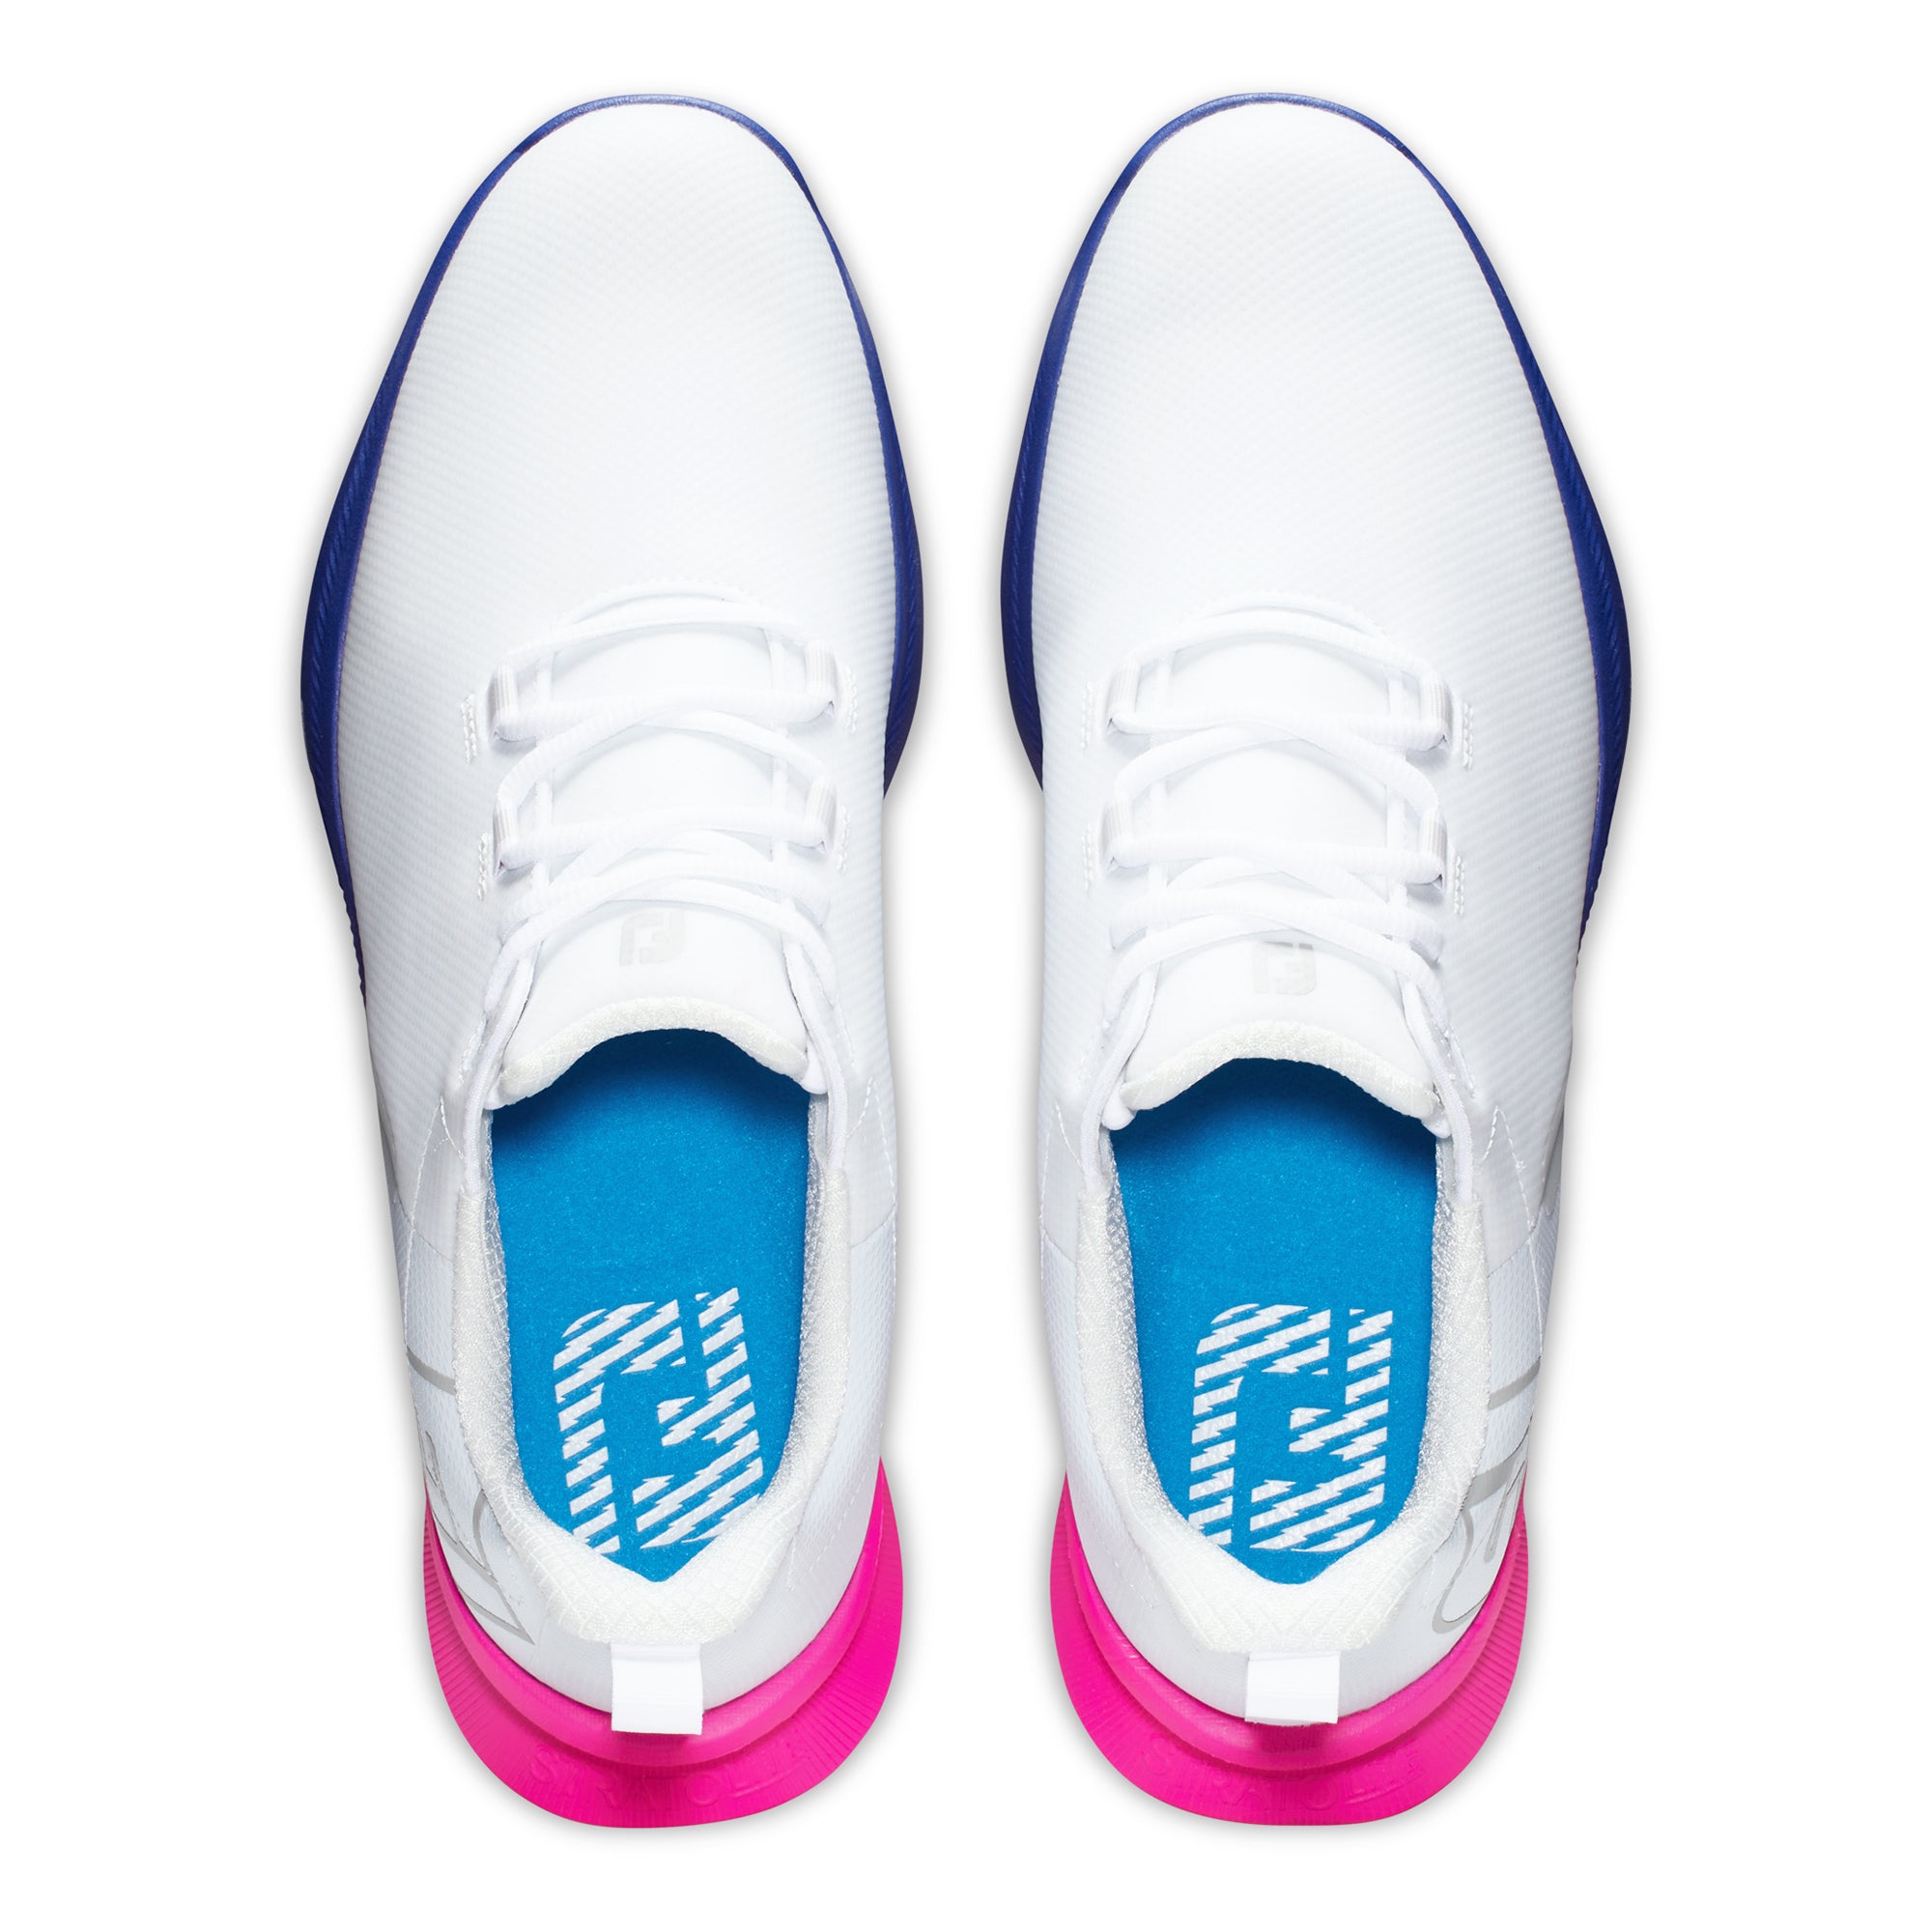 footjoy-fj-fuel-sport-golf-shoes-55455-white-pink-blue